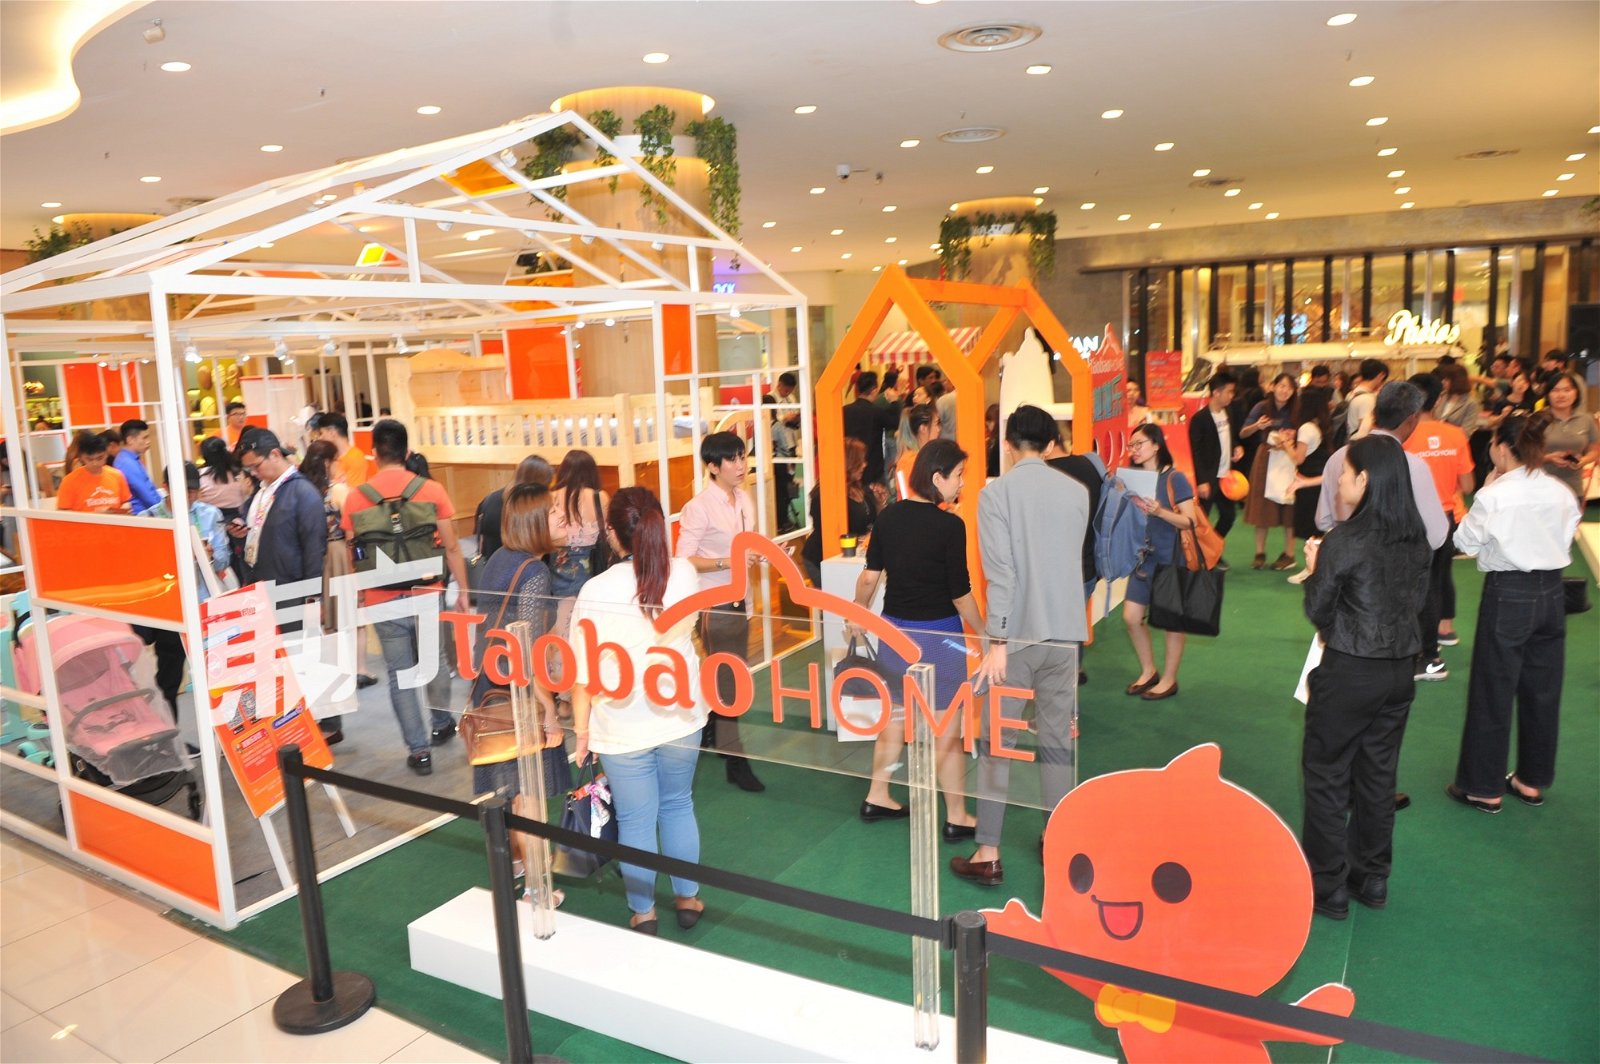 Taobao Home快闪店日前于吉隆坡乐天广 场举办，展览厅模拟了一个真实“家”的场景，让到访者可以亲手触摸淘宝平 台上的家具。